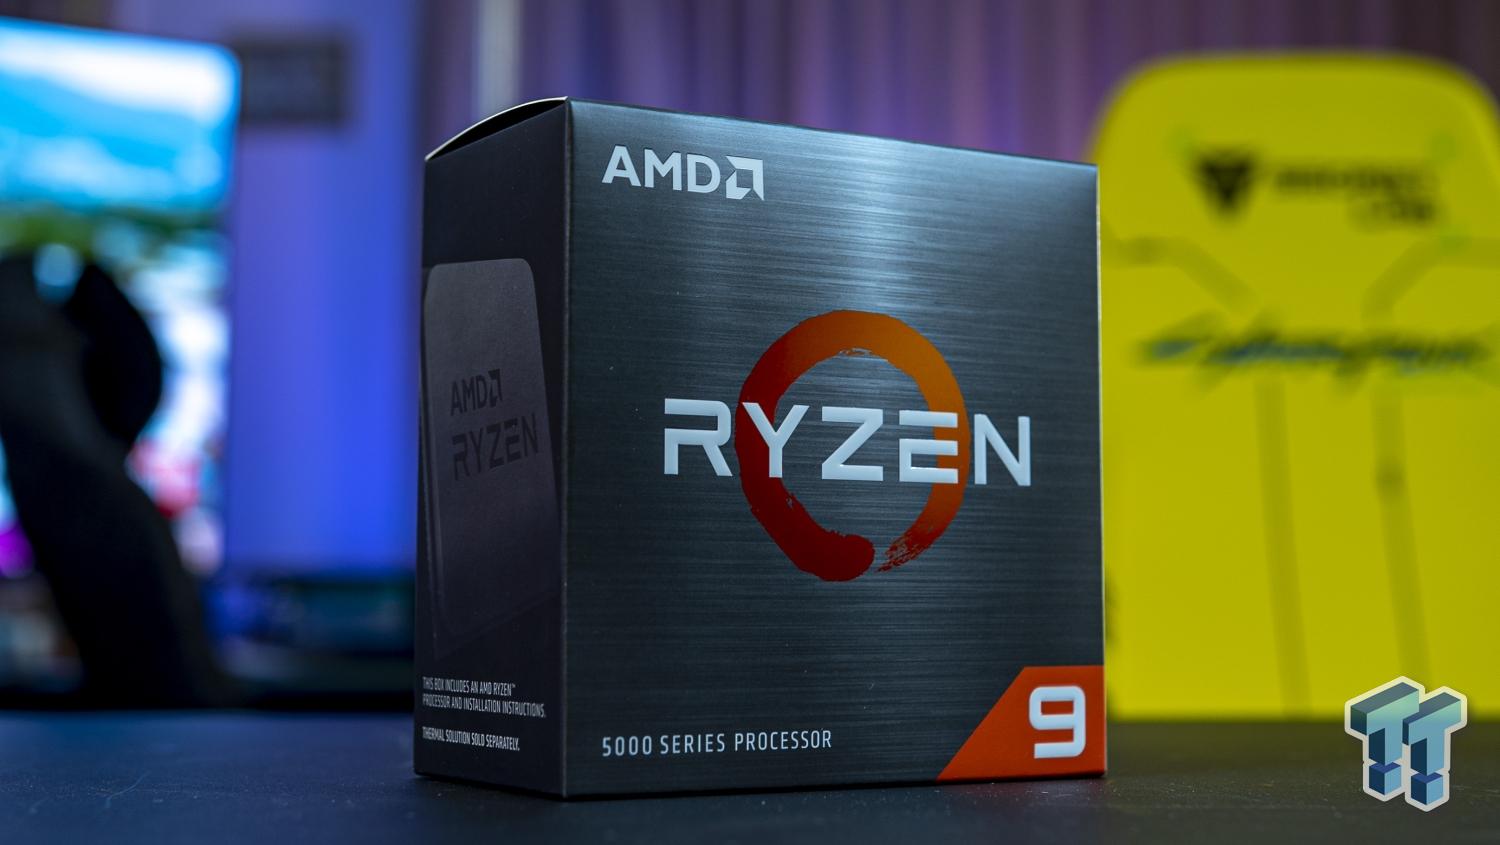 AMD 6-core Ryzen 5 7600X CPU drops to $199, cheaper than 7600 non